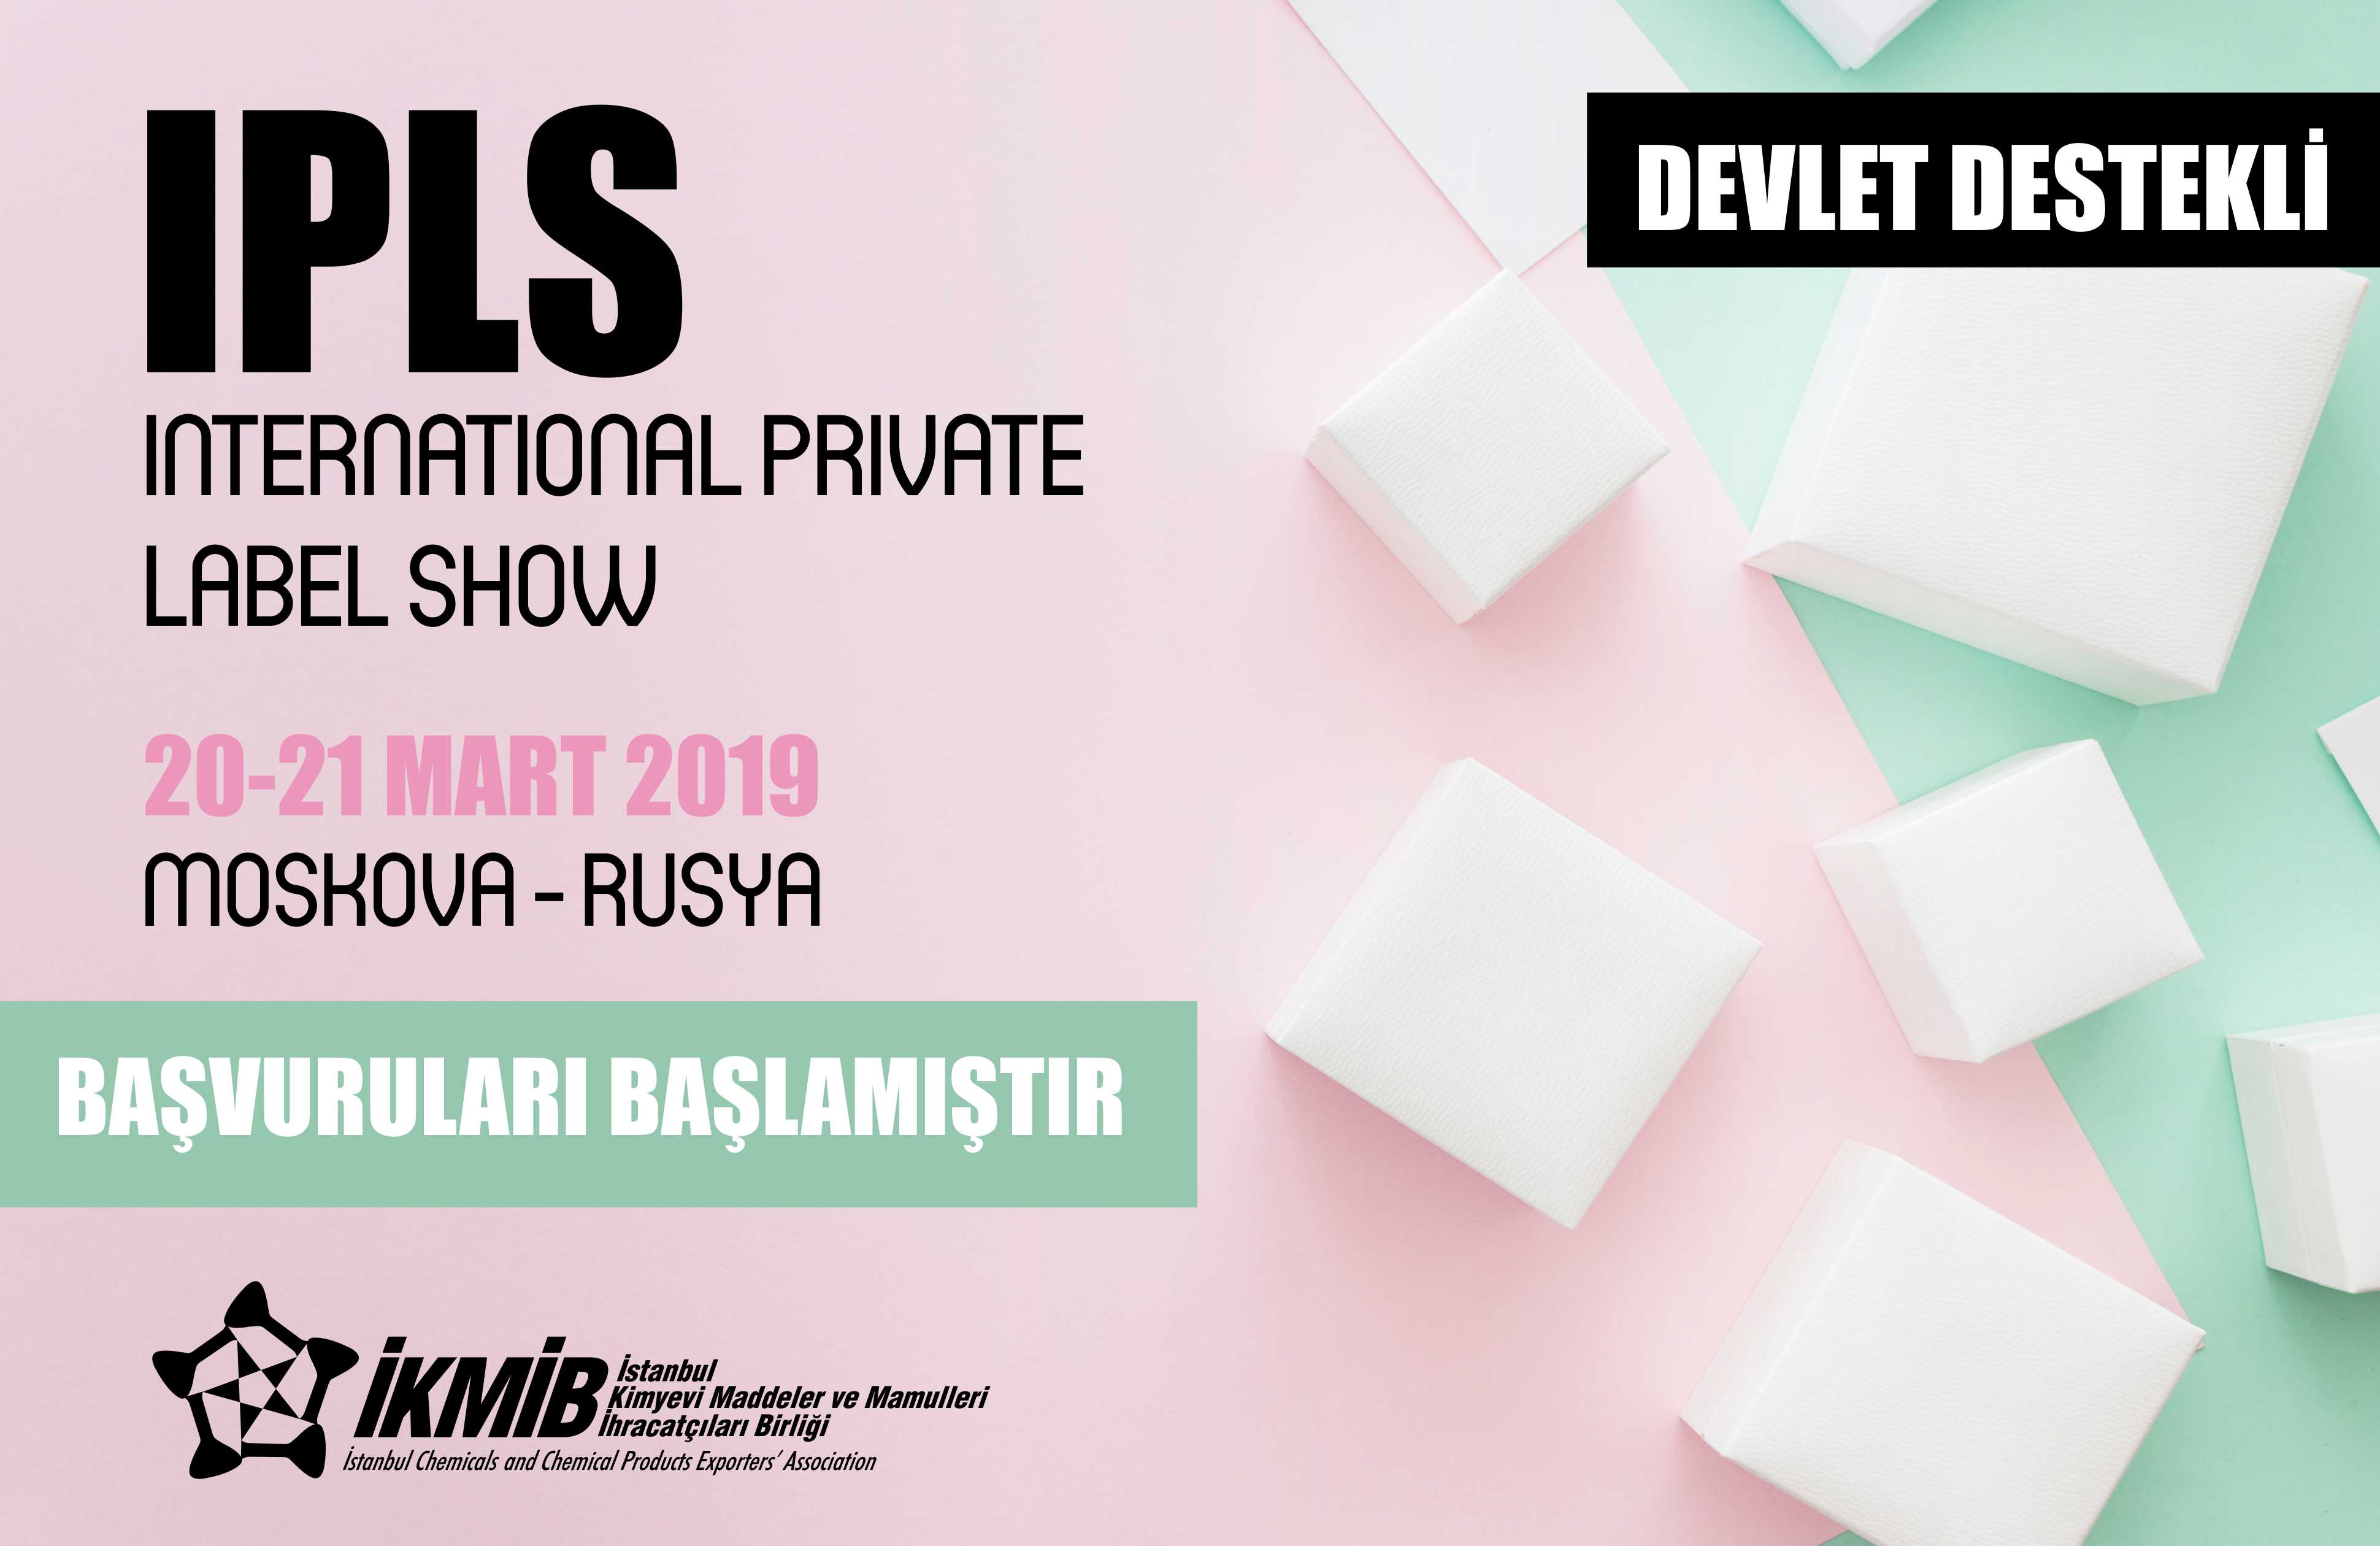 IPLS - International Private Label Show 2019